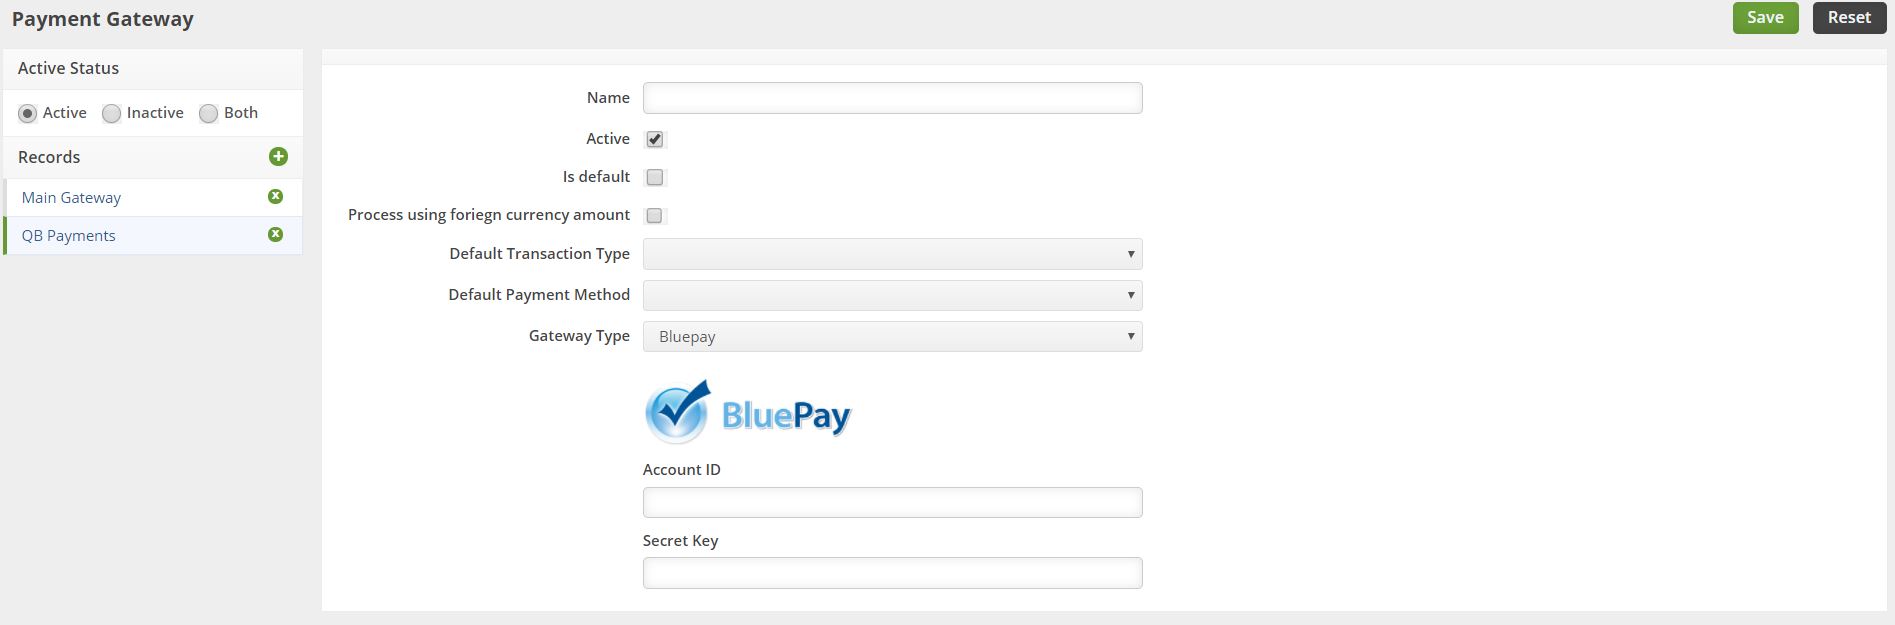 BluePay Gateway Settings